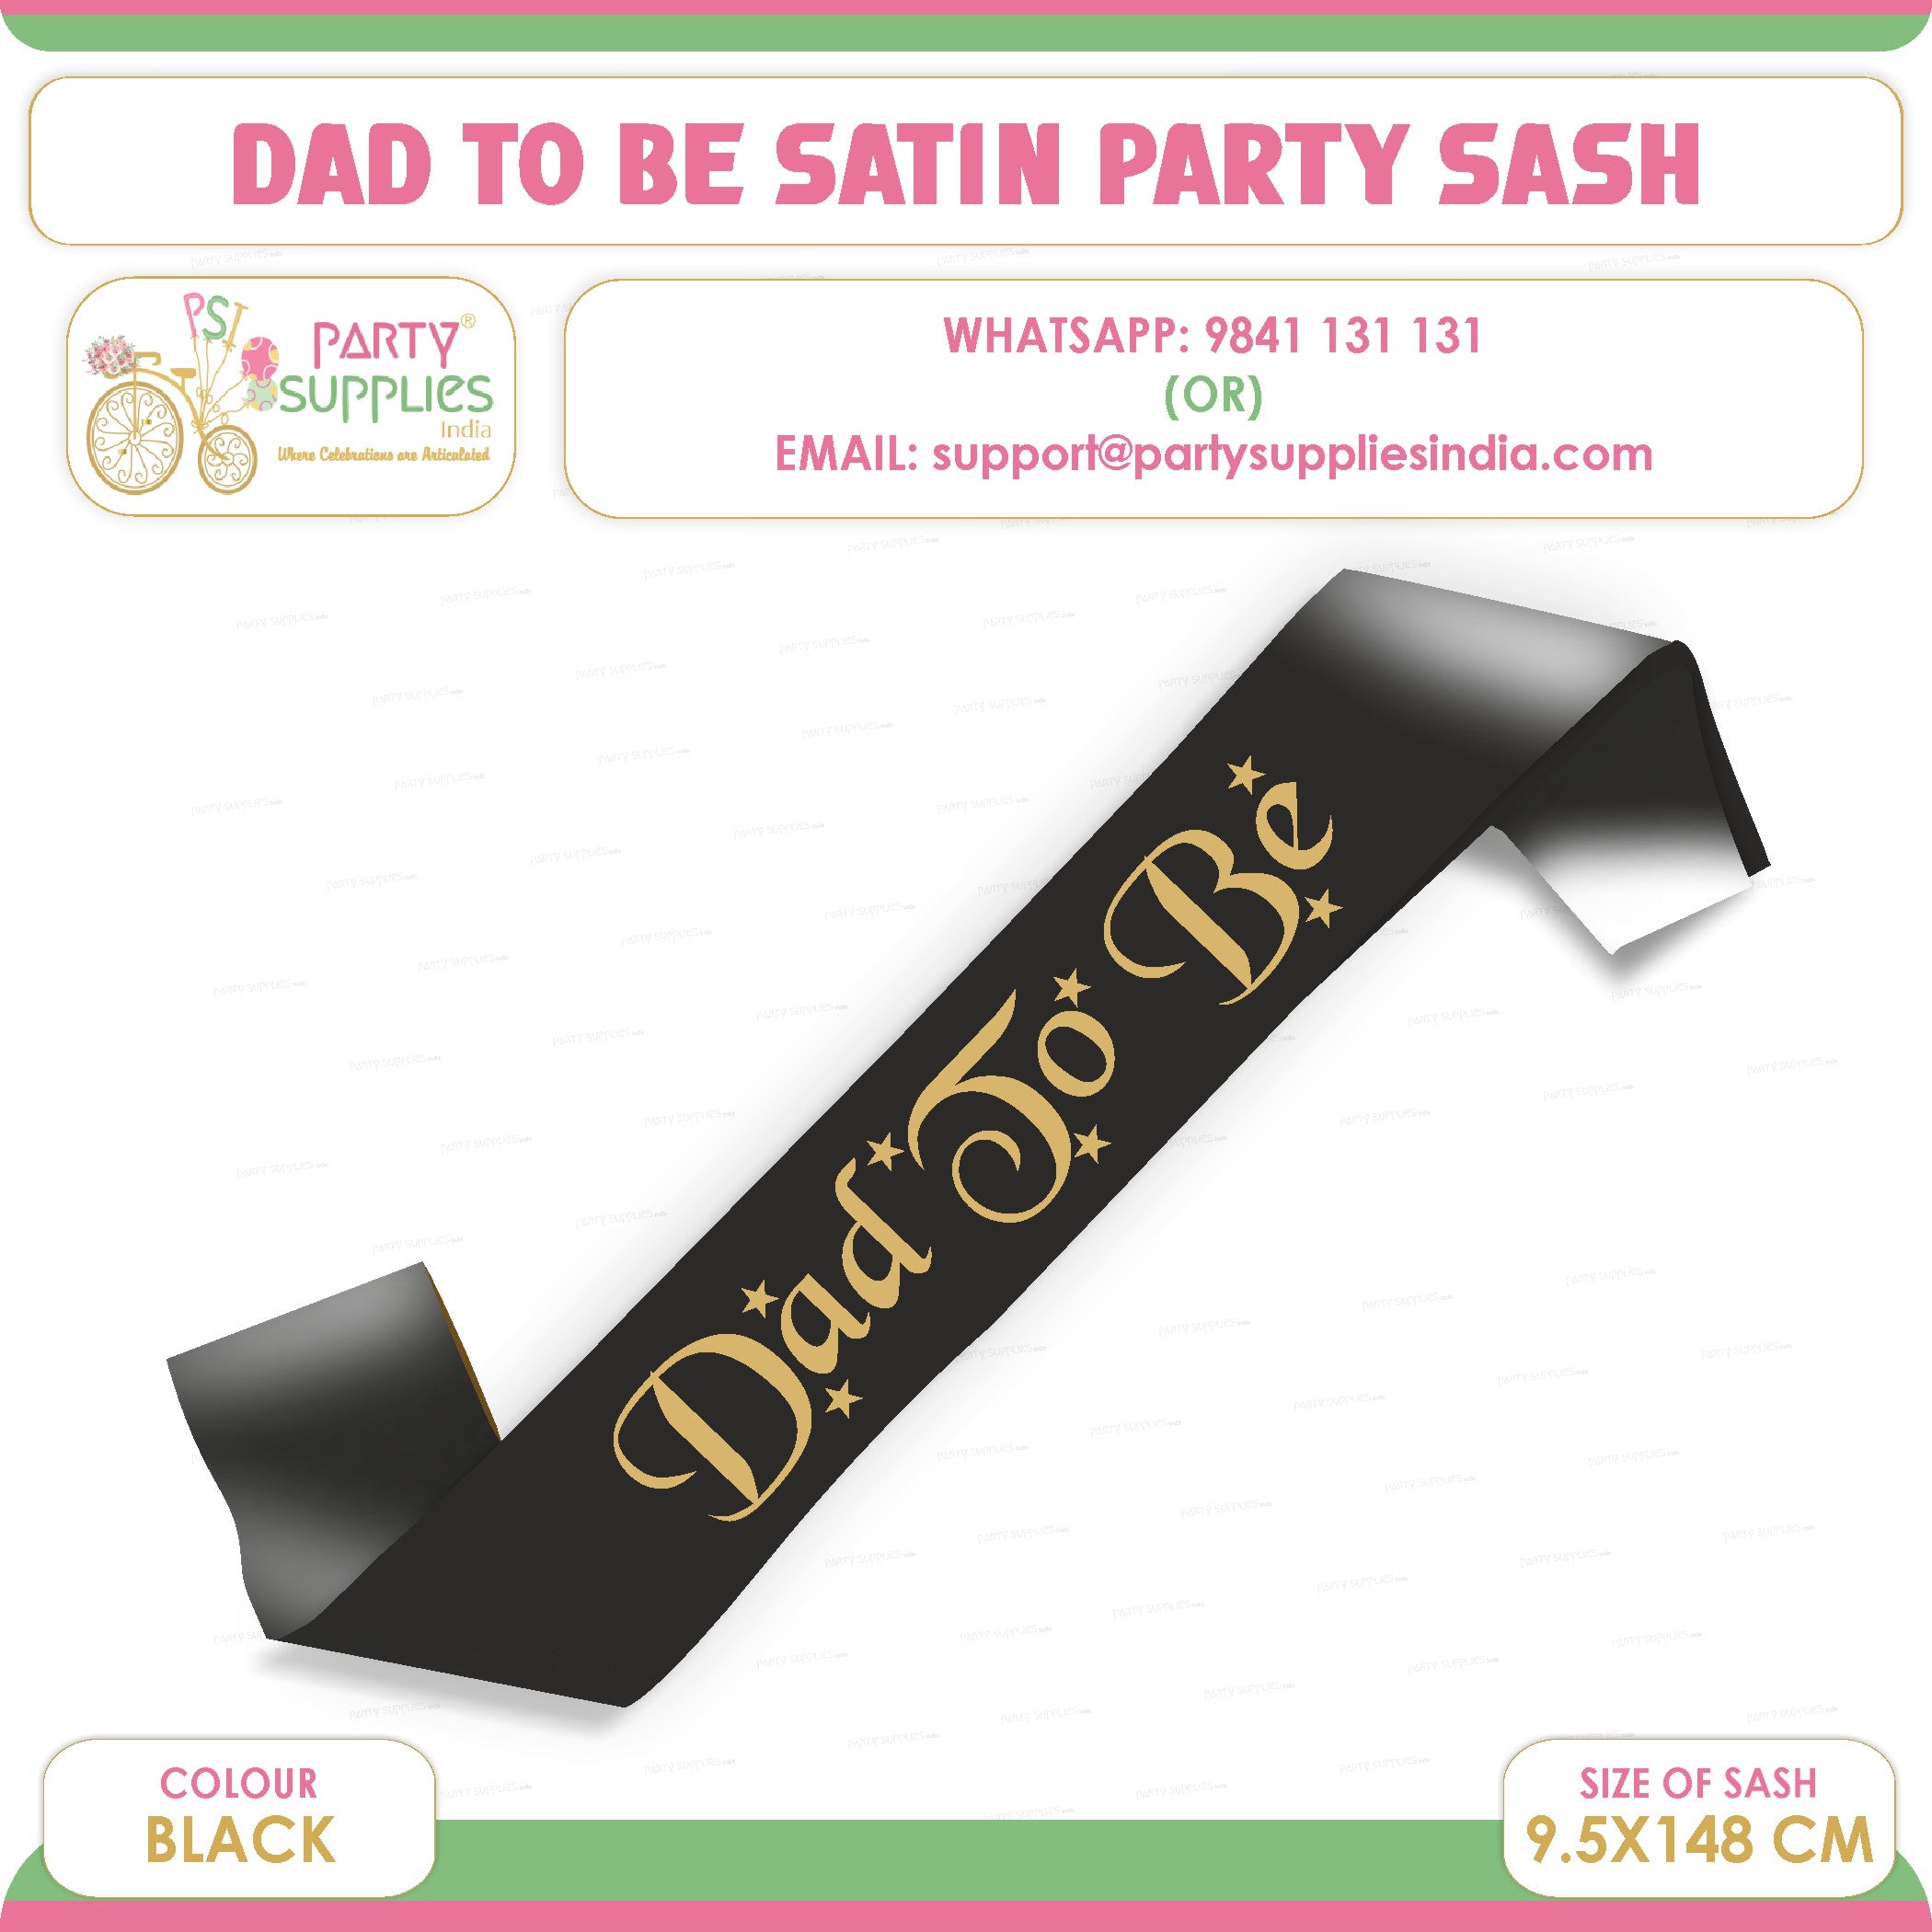 PSI Dad to Be Black Satin Party Sash